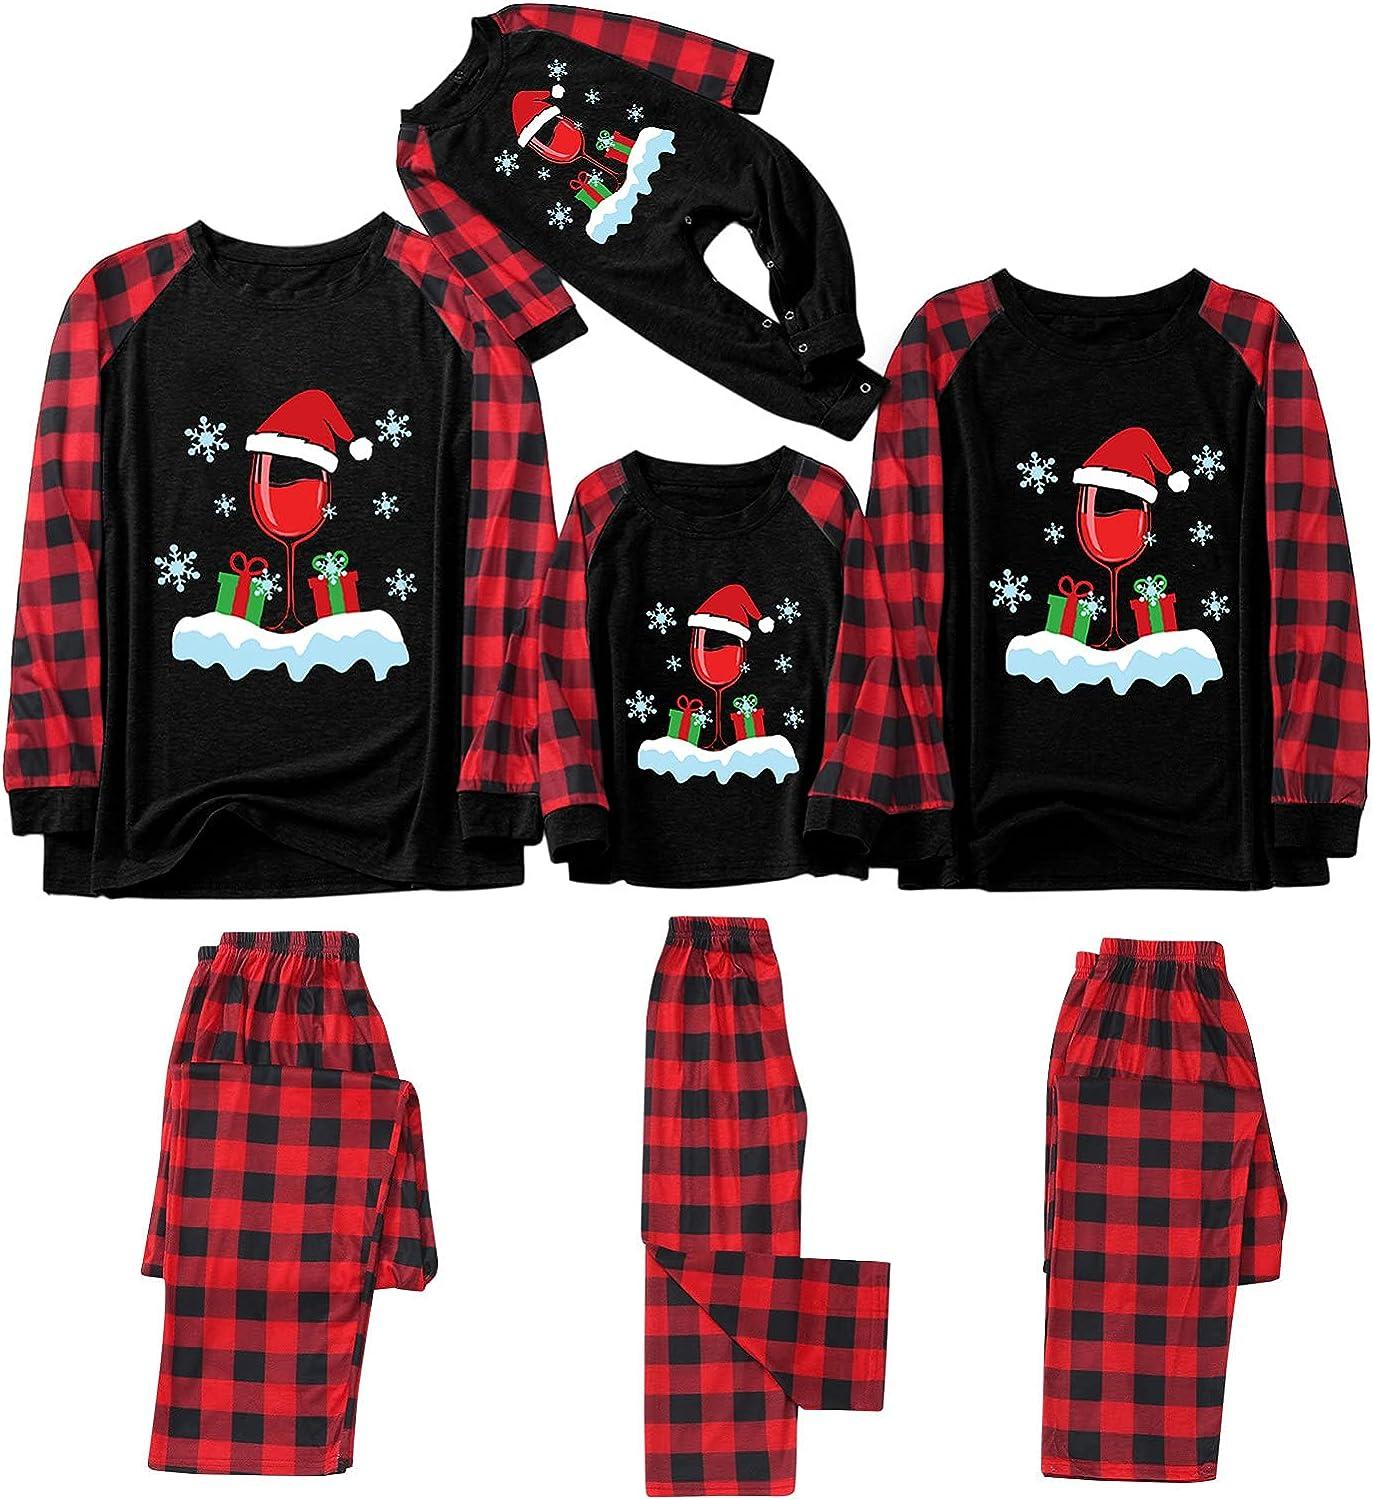  Family Christmas Pjs Matching Sets Plaid Pajama